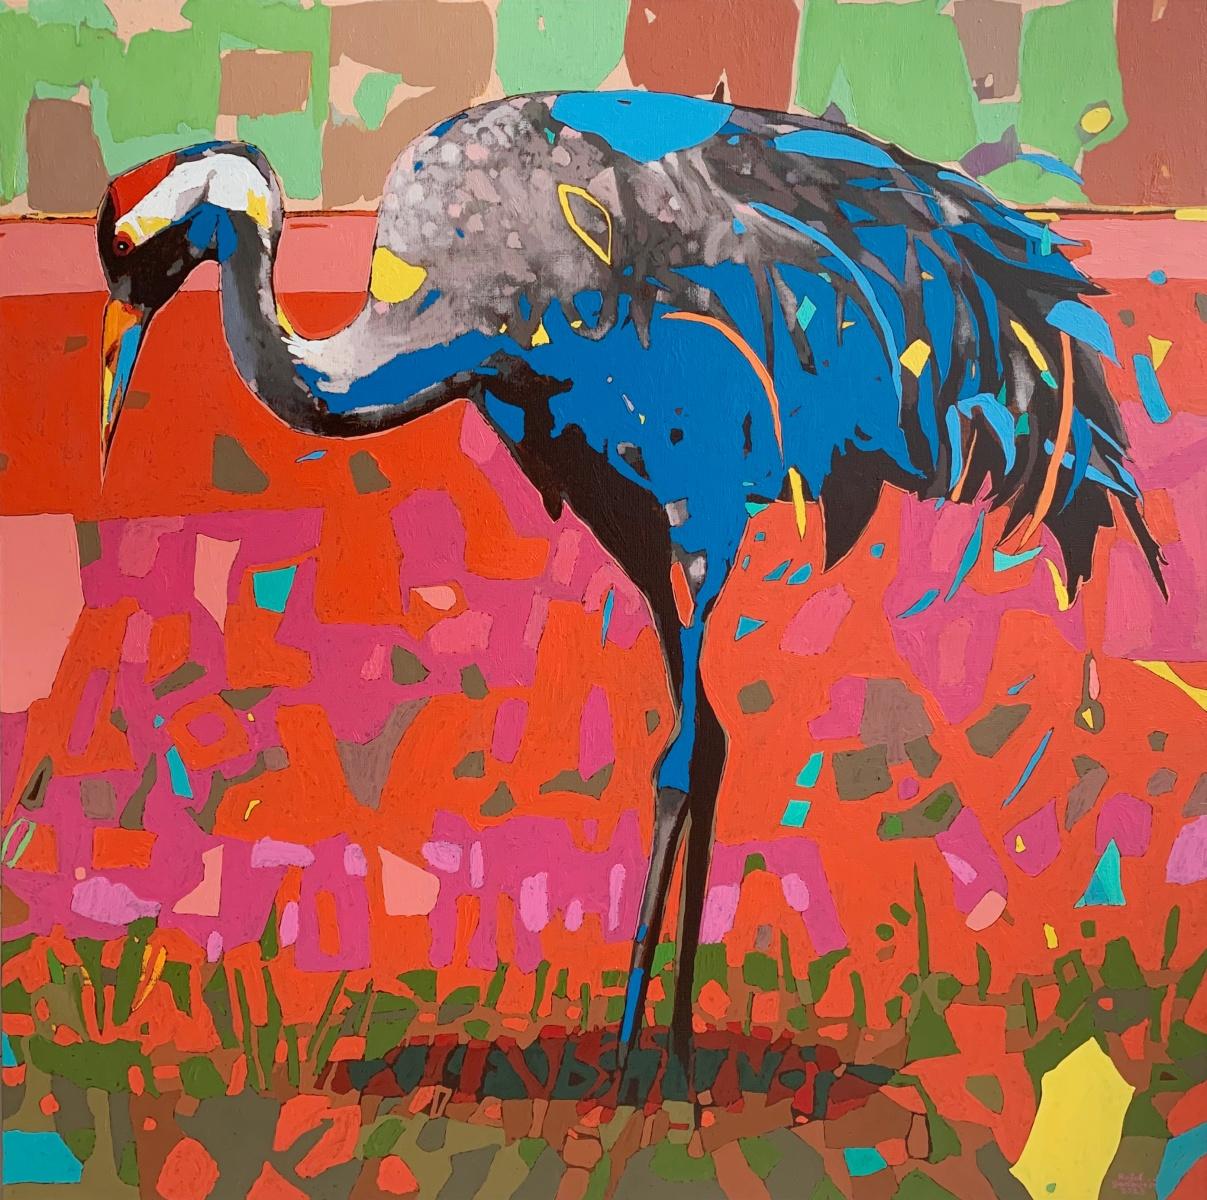 A Crane 08. Figurative Oil Painting, Colorful, Pop art, Animals, Polish artist